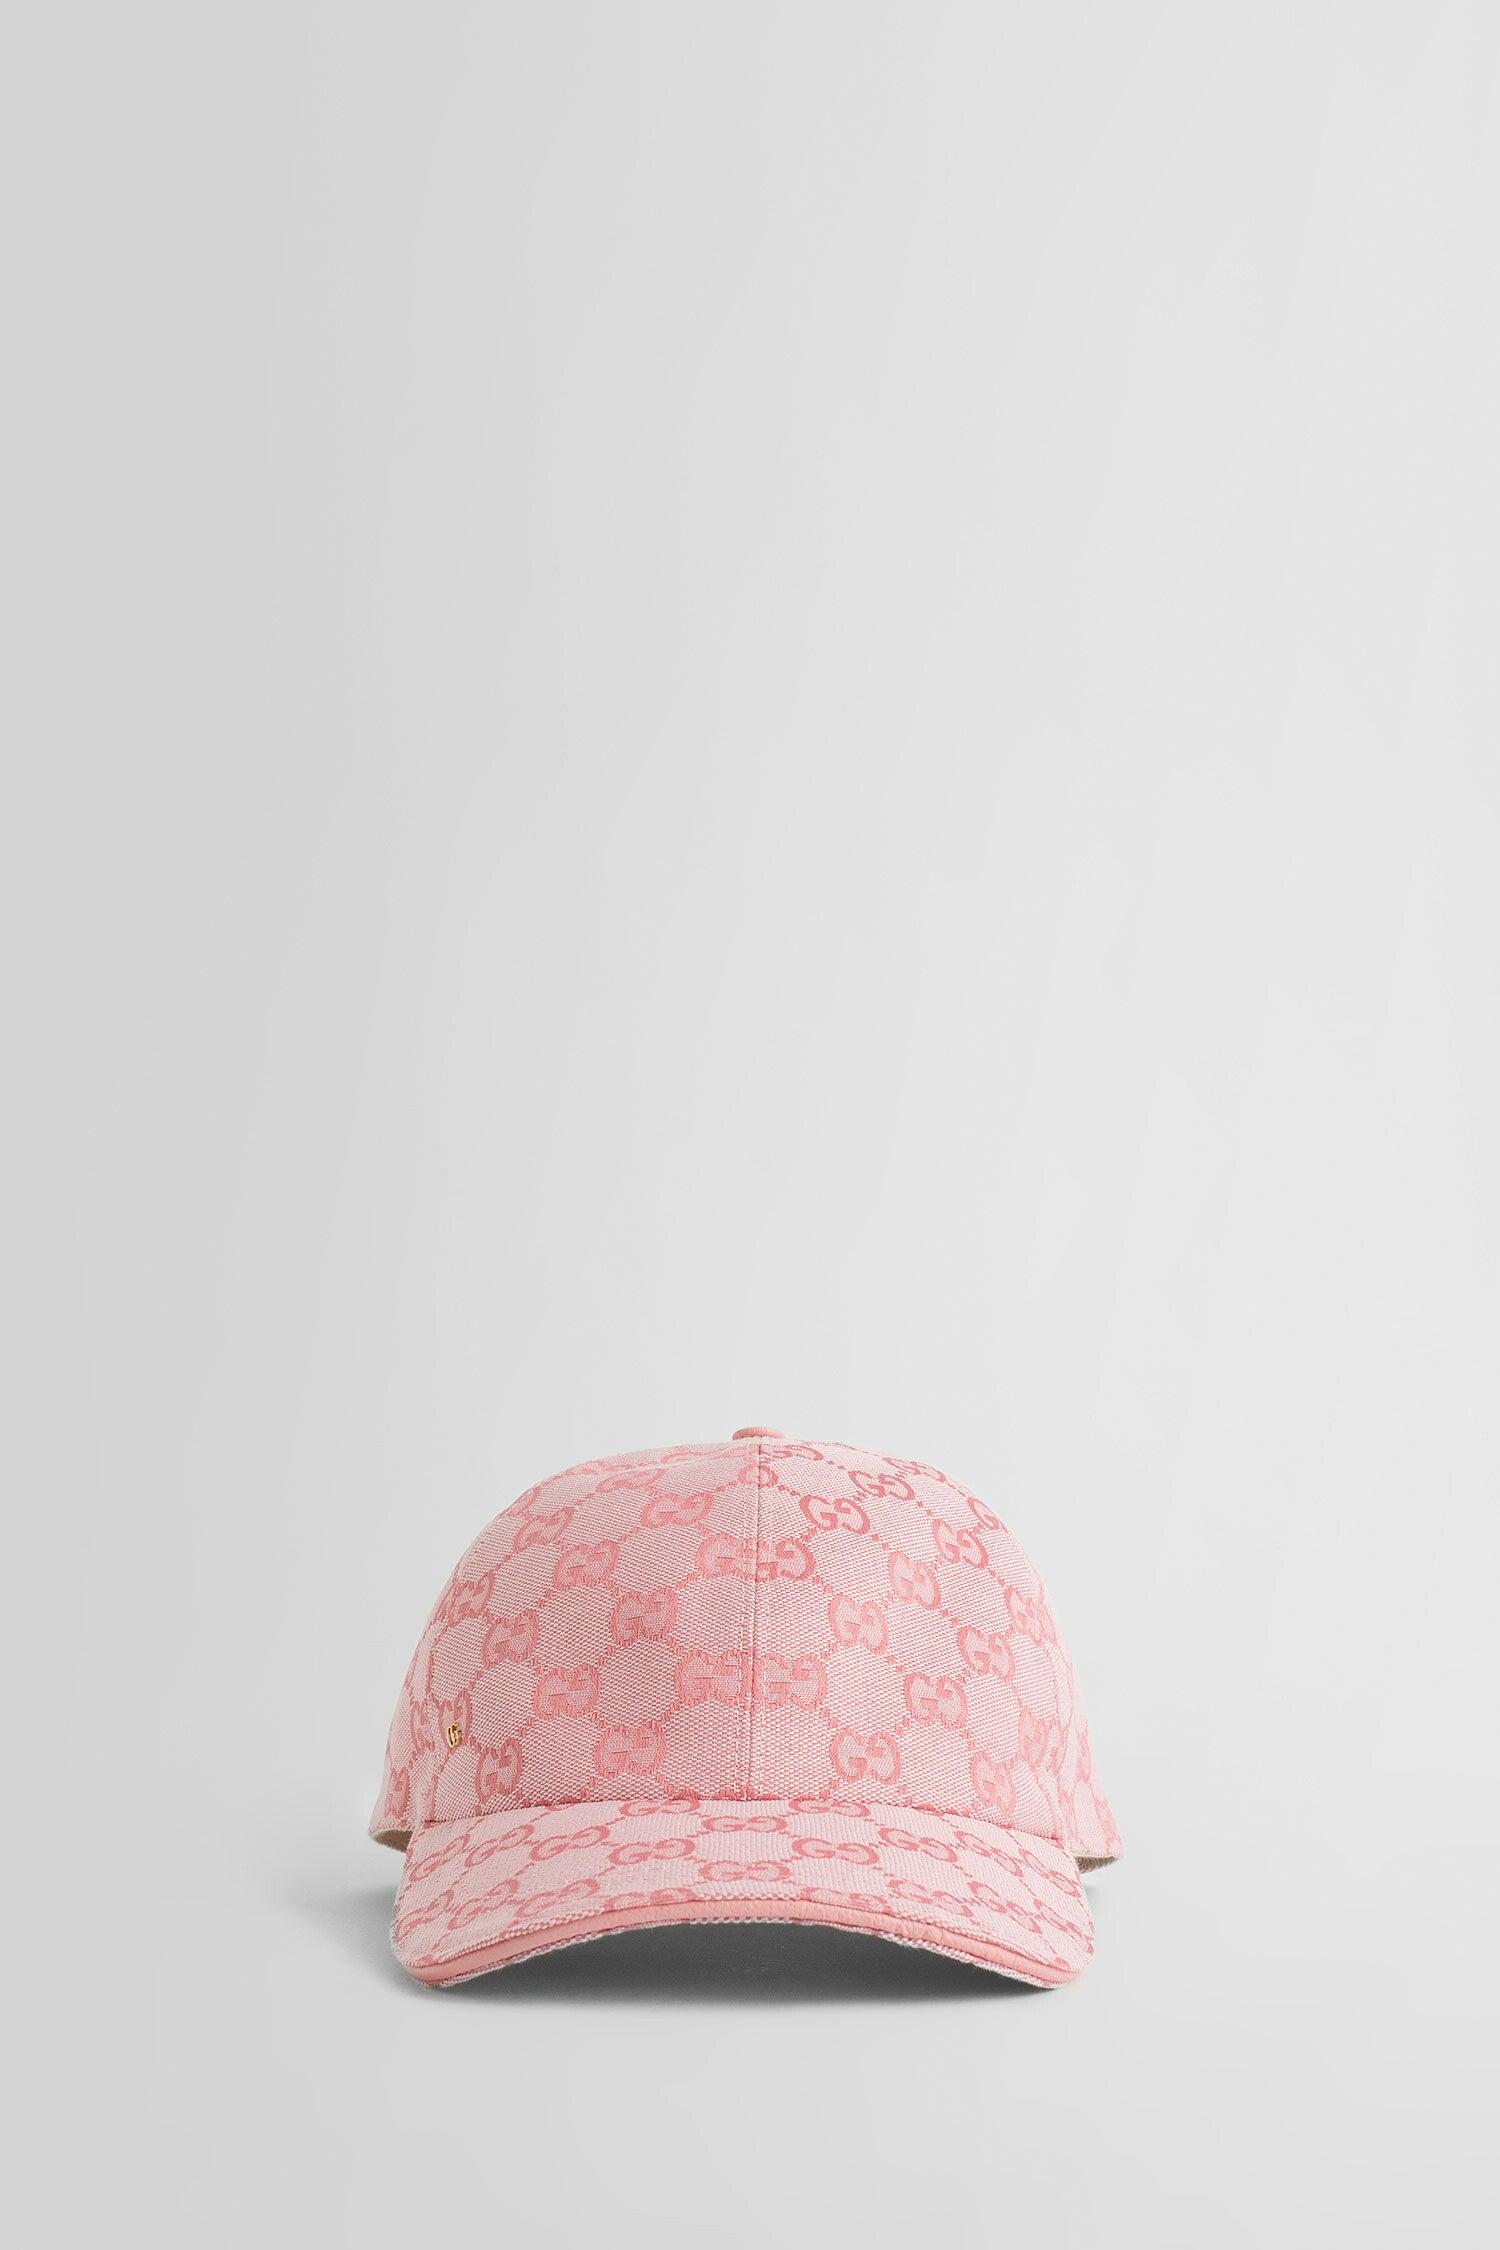 Santa Gucci trucker hat pink  Trendy Hats - Lush Fashion Lounge